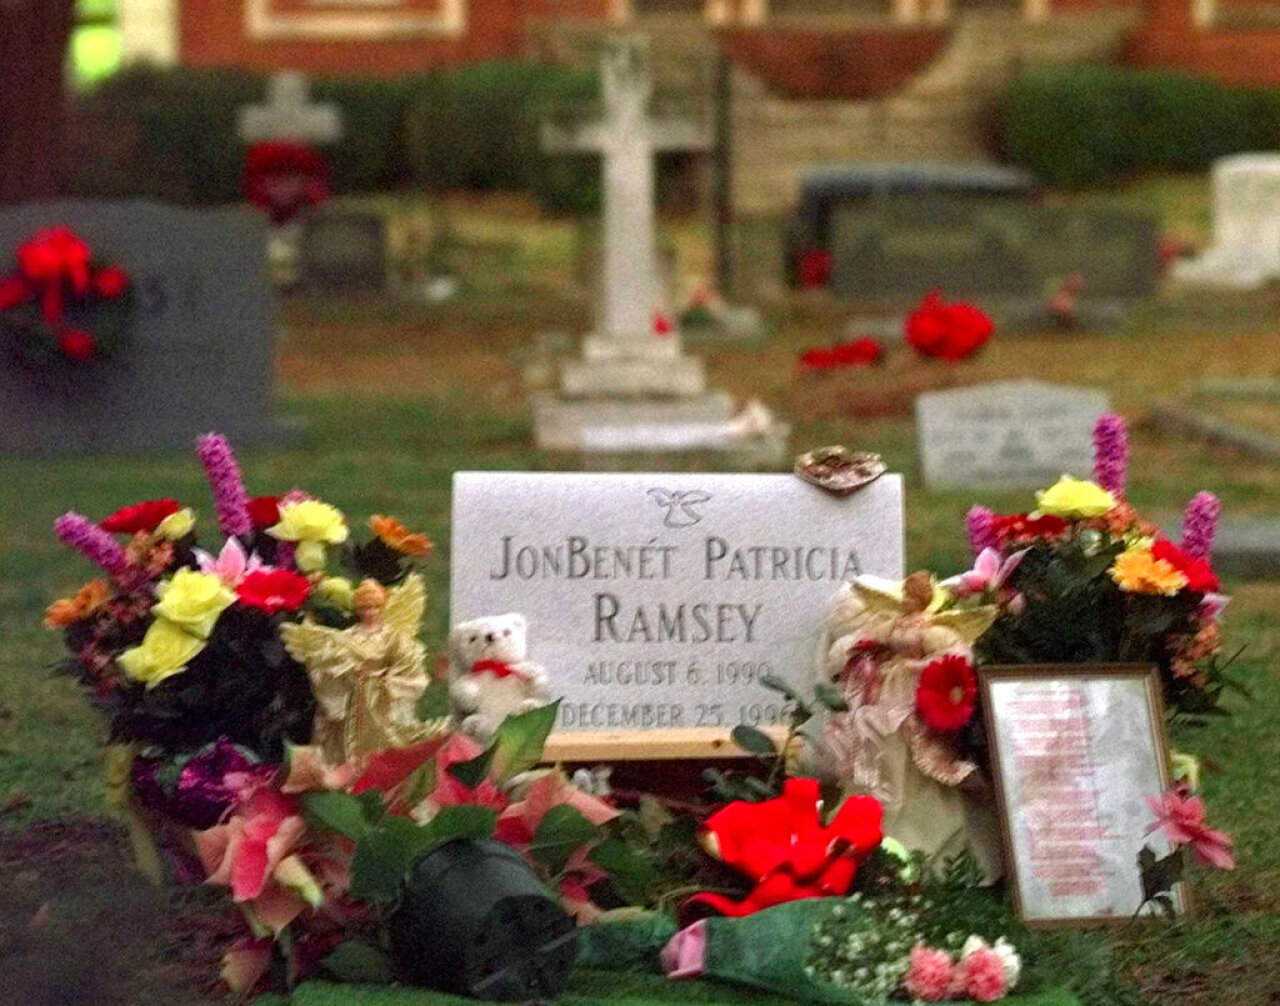 [IMAGE] Family makes new push to solve JonBenét Ramsey murder